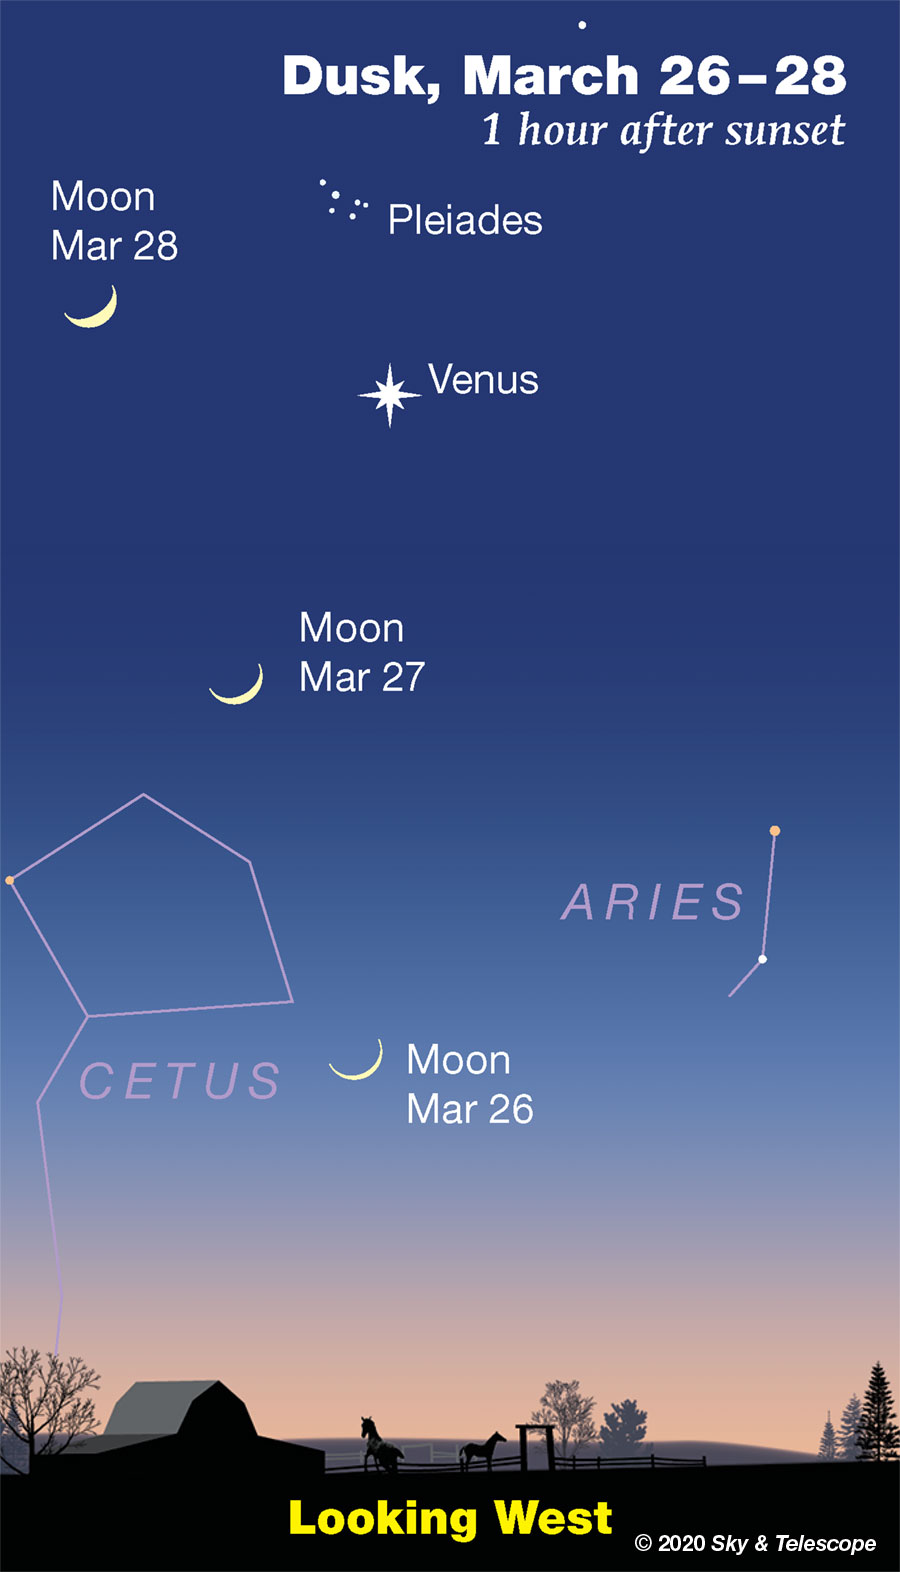 Moon passing Venus at dusk, March 26-28, 2020